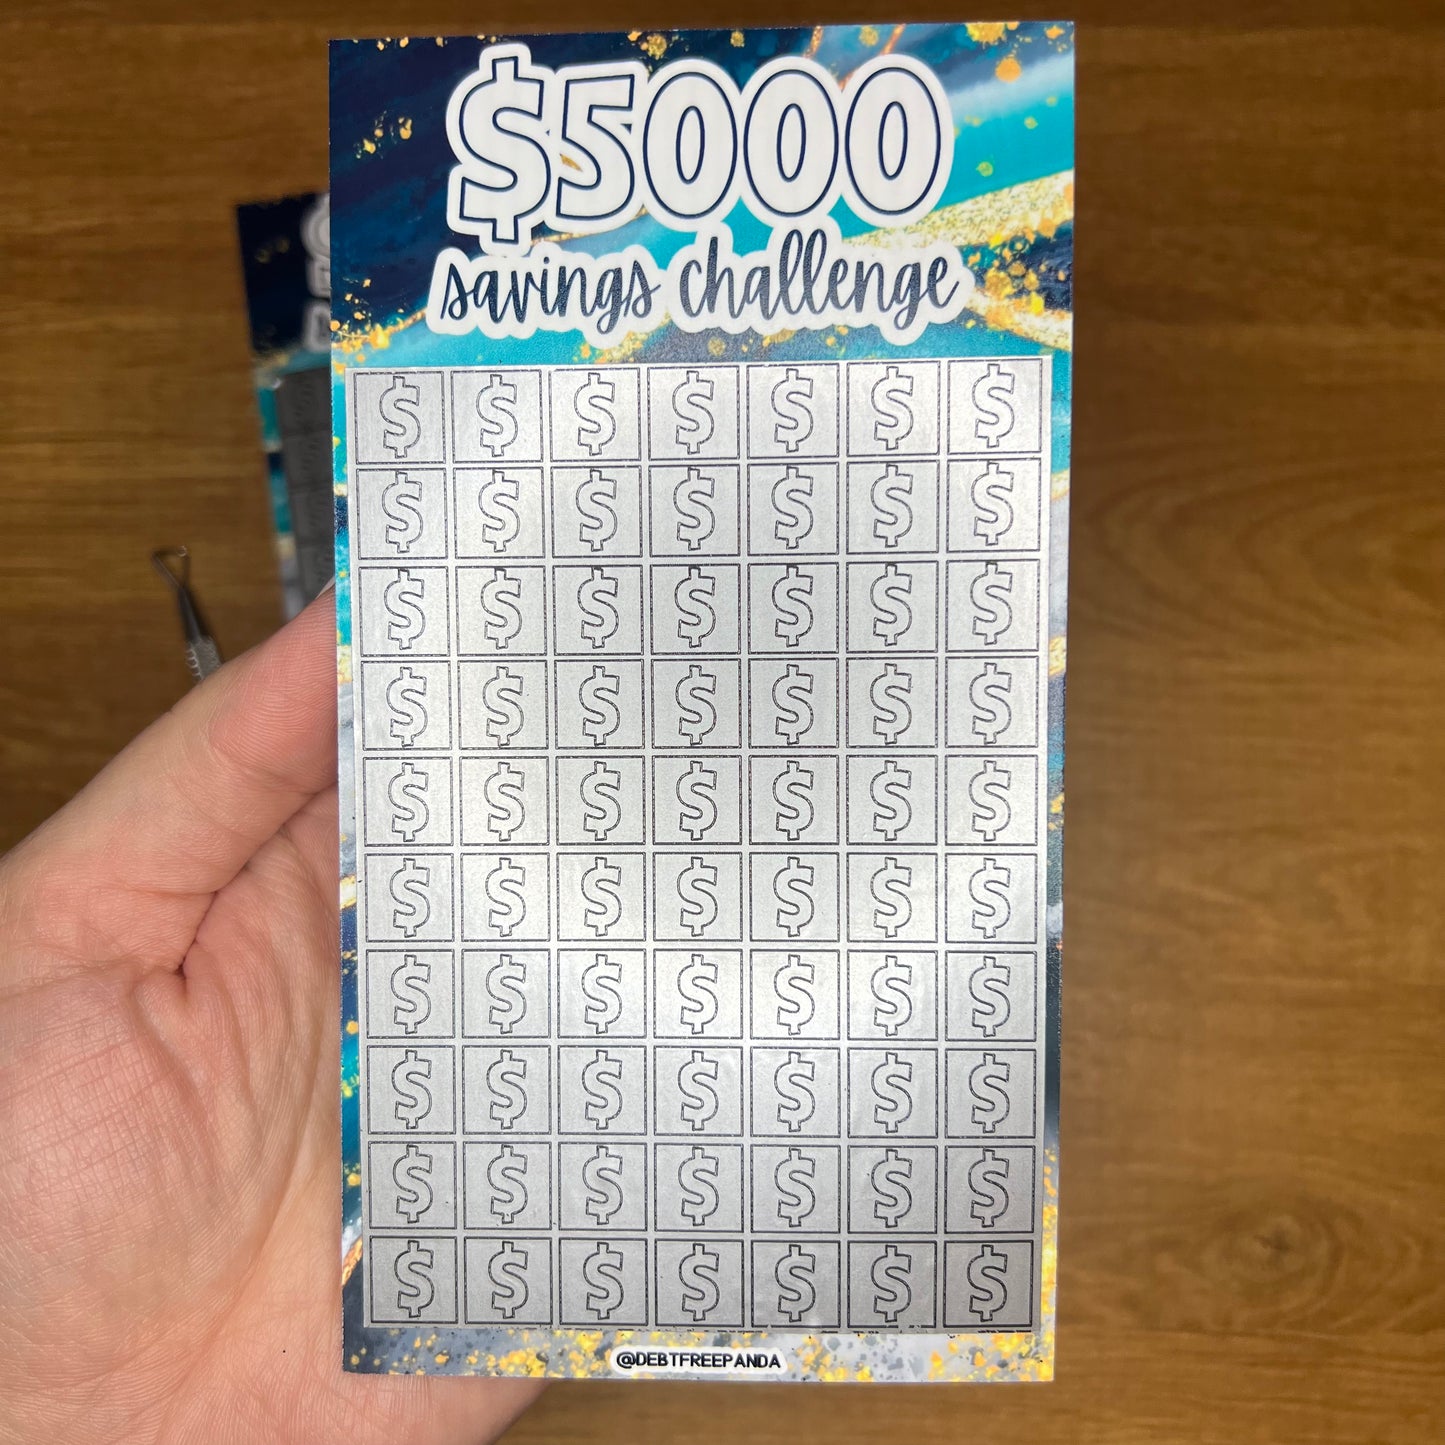 $5000 Savings Scratcher Challenge